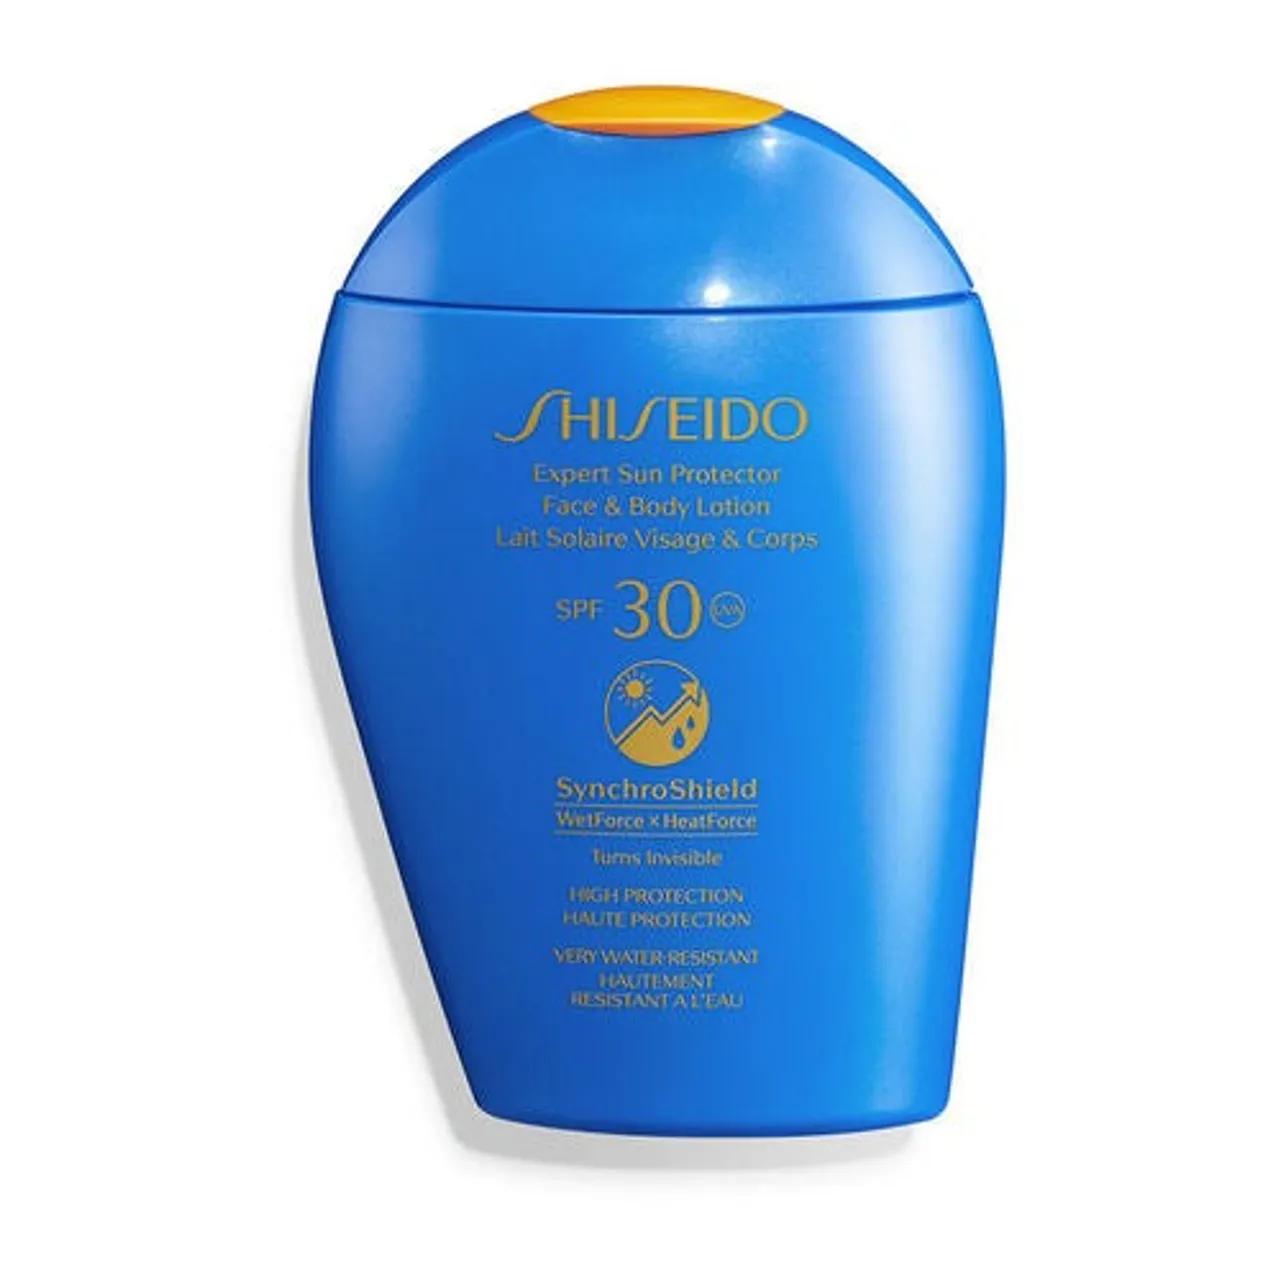 Shiseido Expert Sun Protector Face&Body Lotion SynchroShield SPF 30